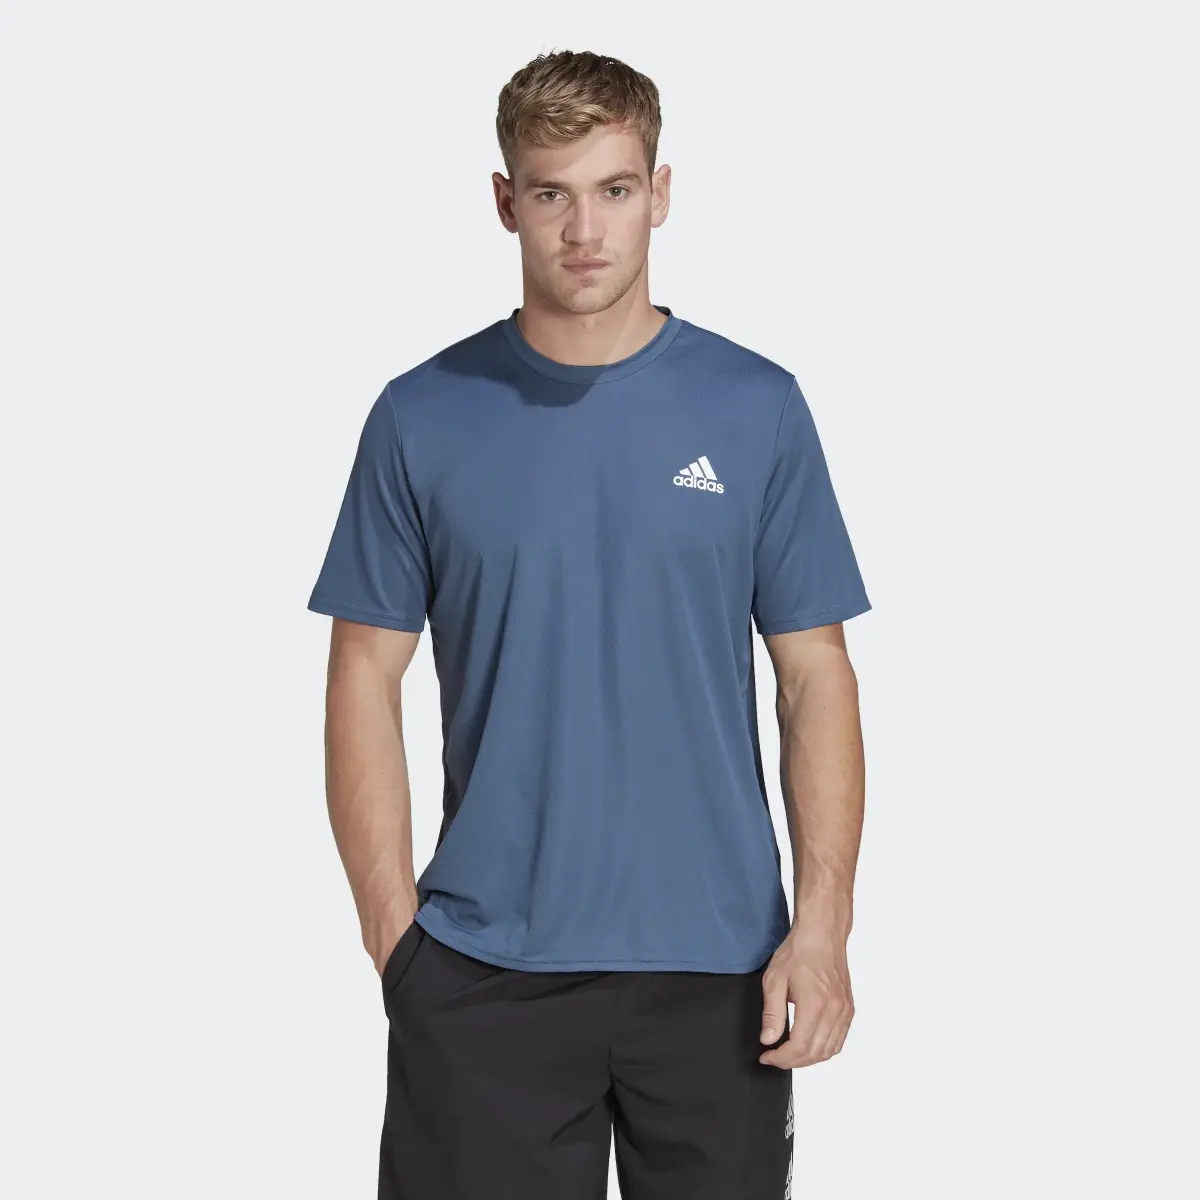 Adidas T-shirt AEROREADY Designed for Movement. 2